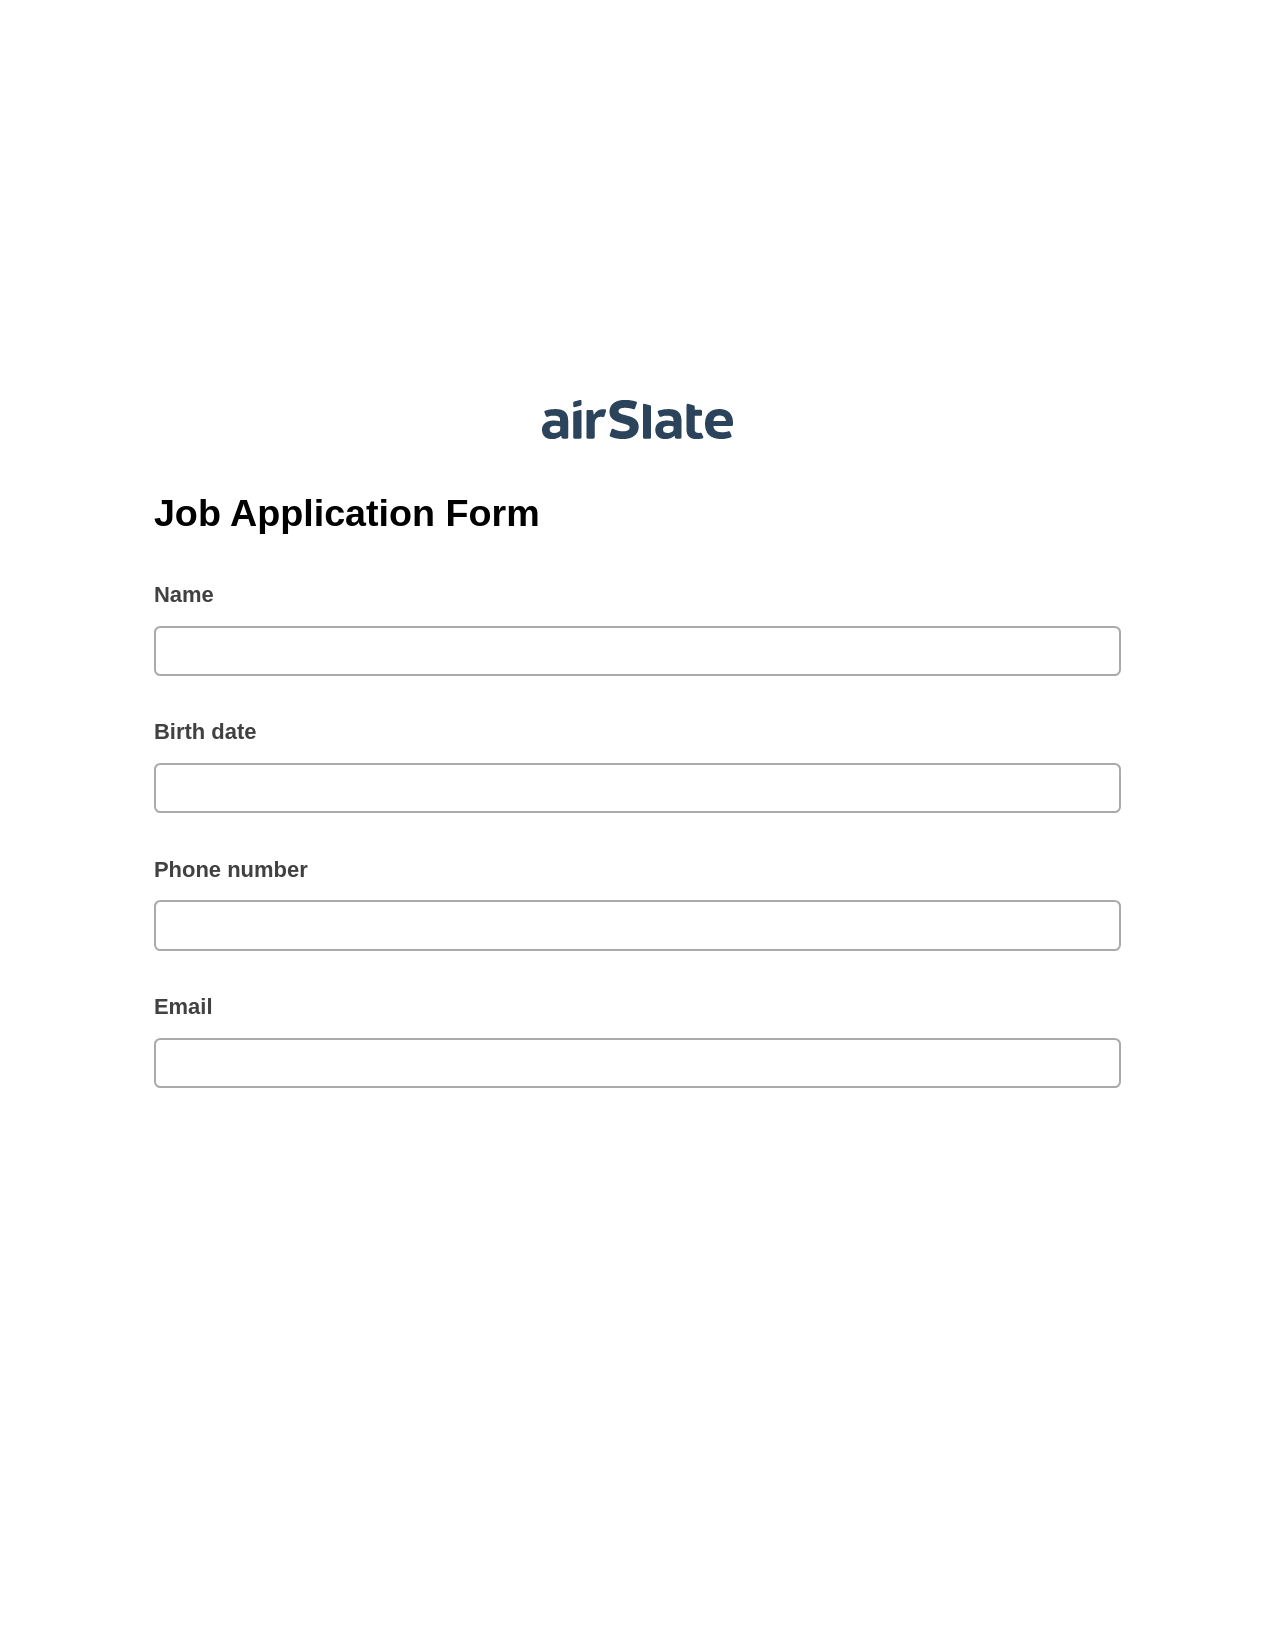 Multirole Job Application Form Pre-fill from CSV File Bot, Create Slate every Google Sheet Update Bot, Text Message Notification Postfinish Bot